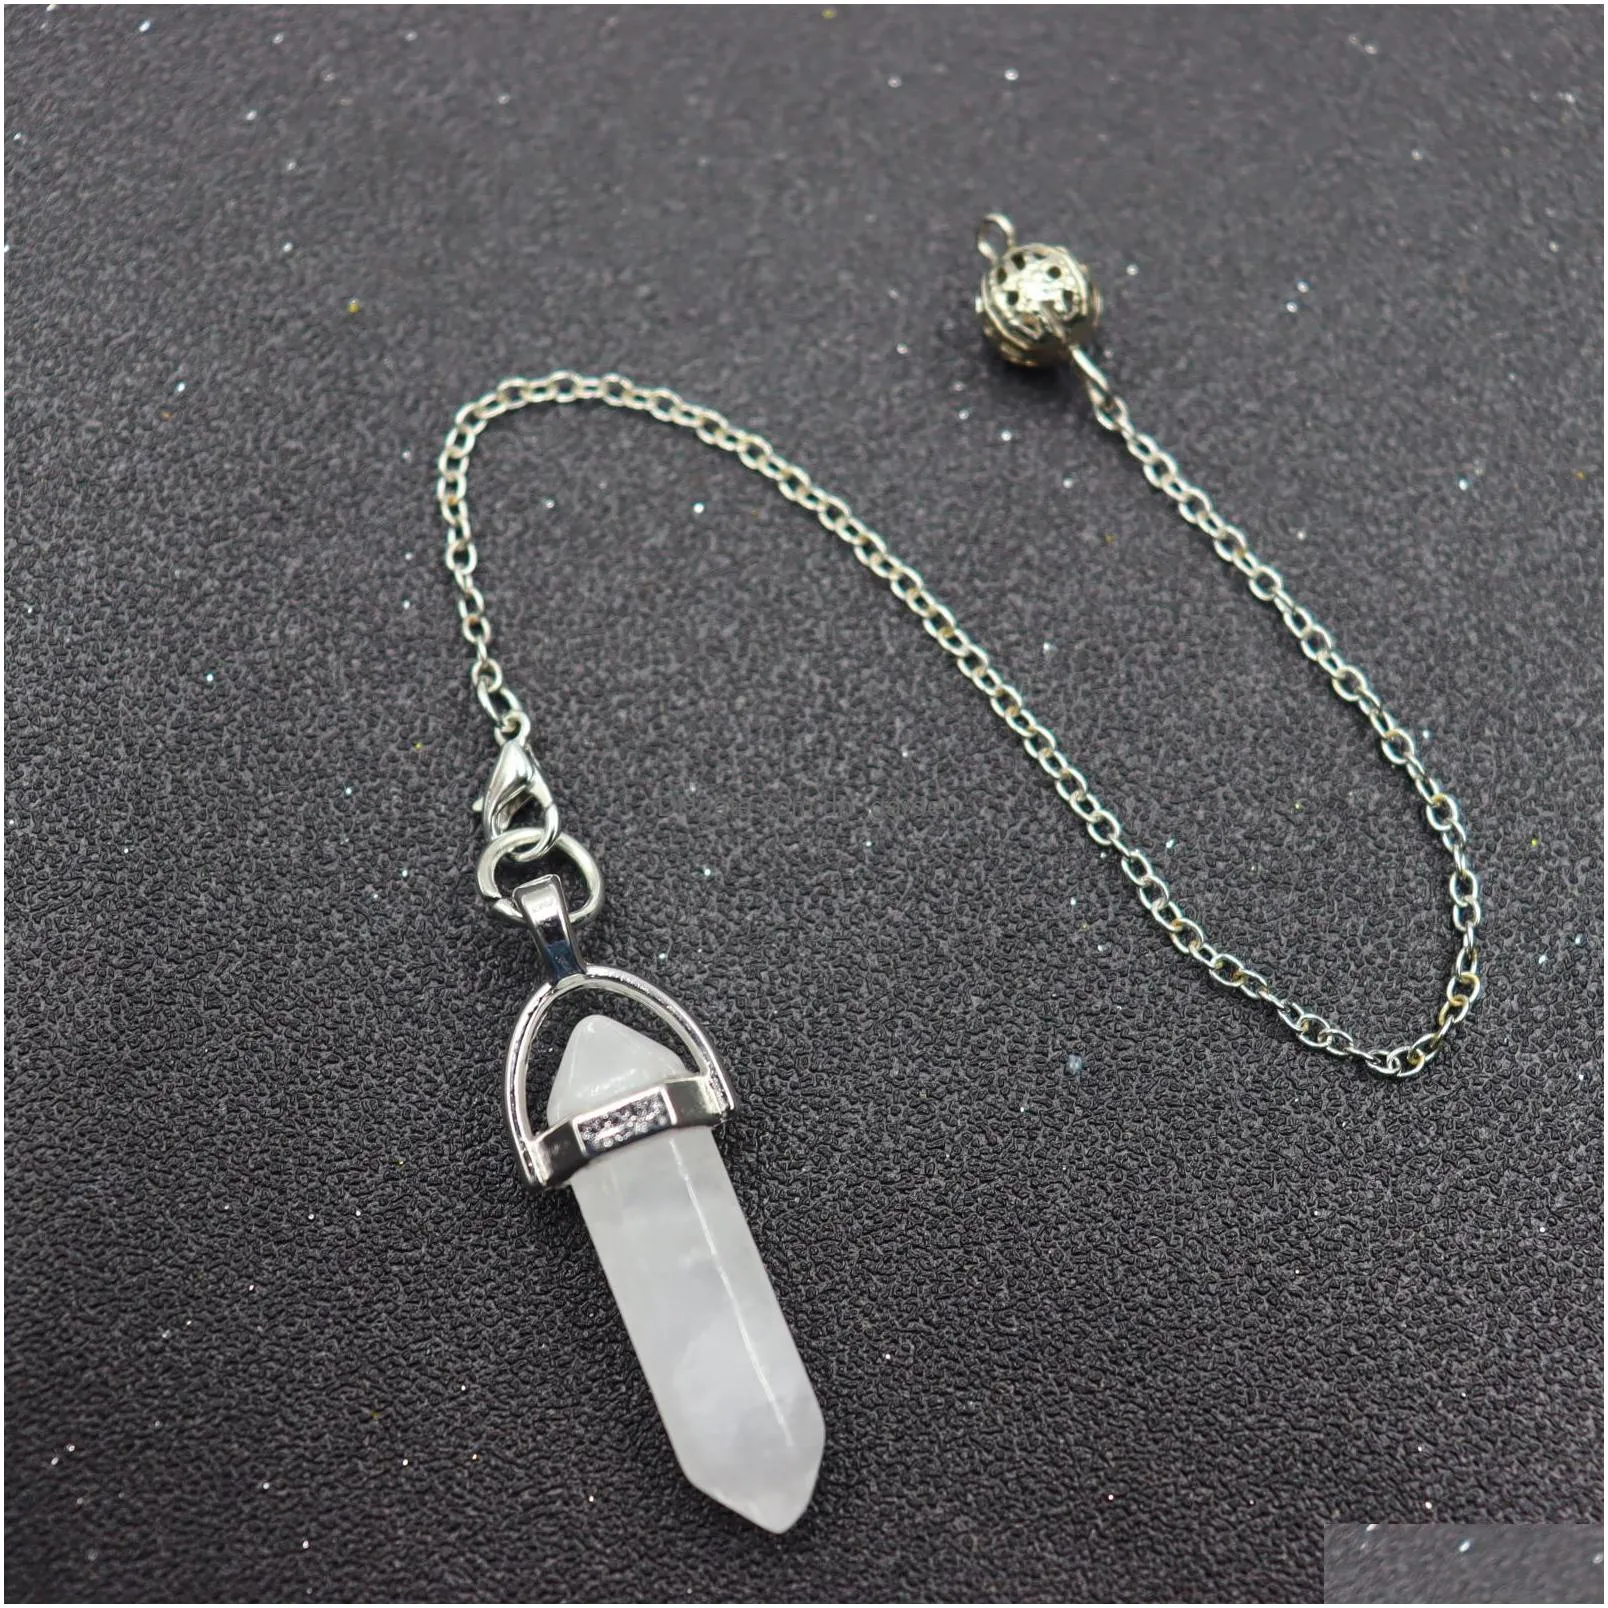 dowsing pendulum charms quartz hexagonal bullet shape natural stone crystal reiki healing pendule pendant pendulums for dowsing